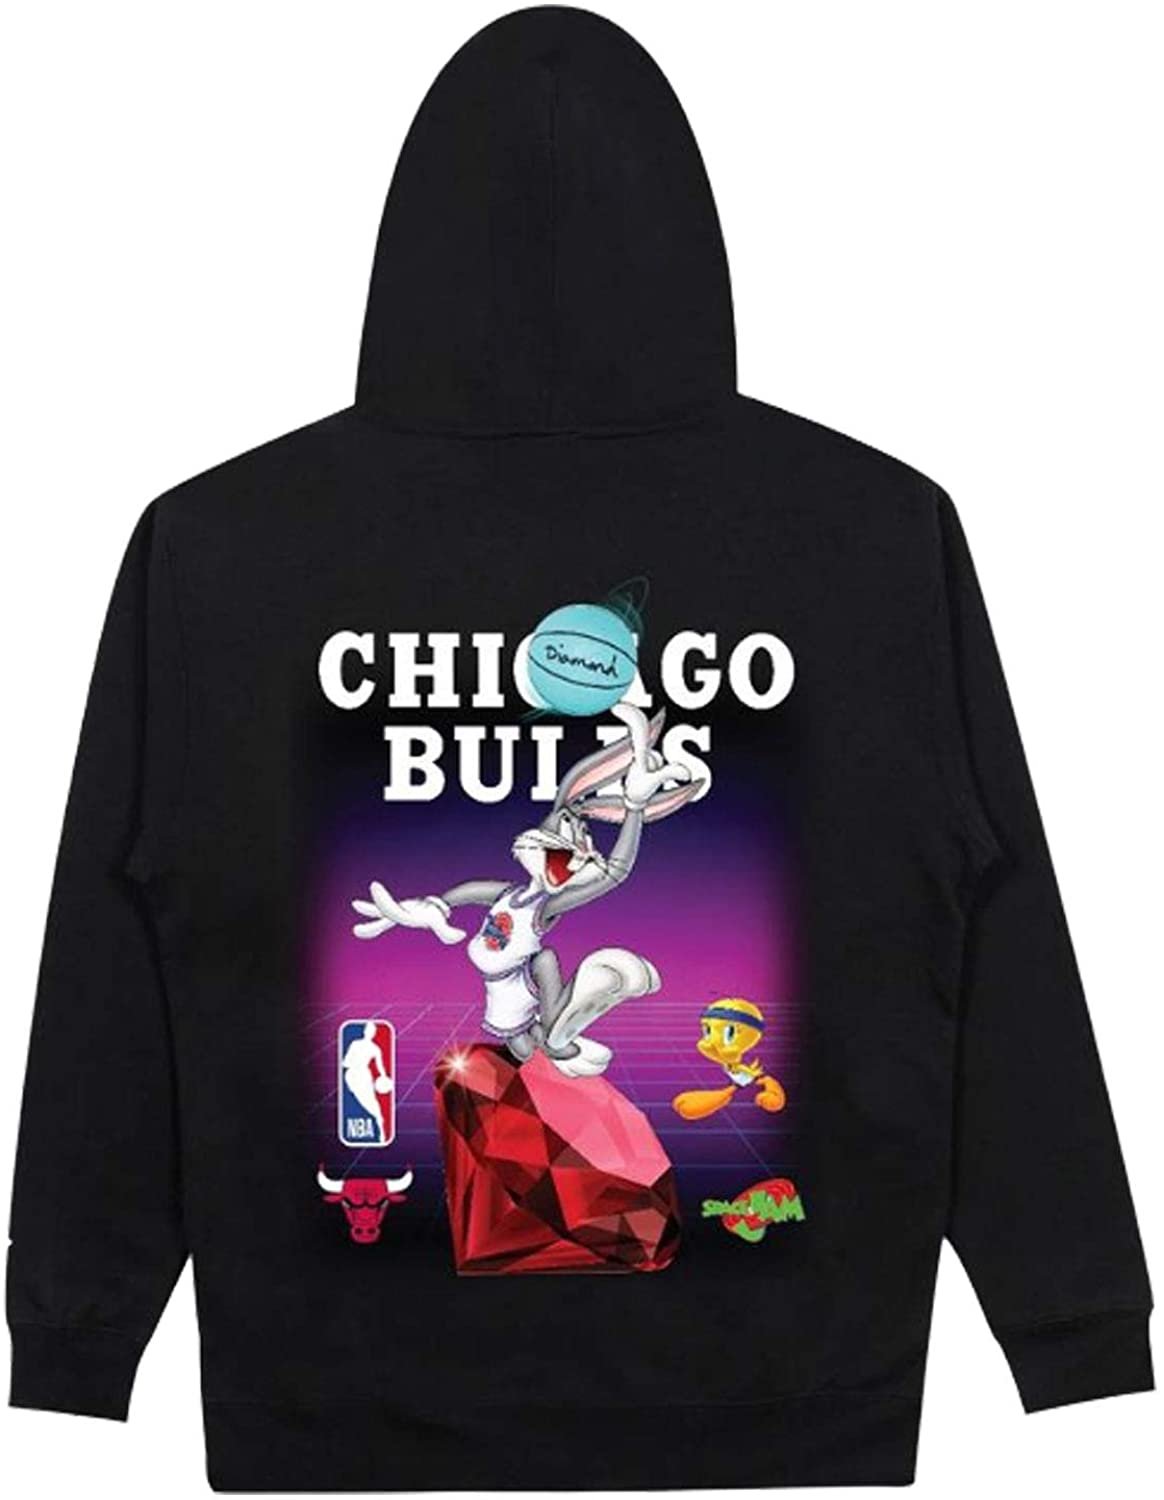 Space Jam x NBA Chicago Bulls Hoodie